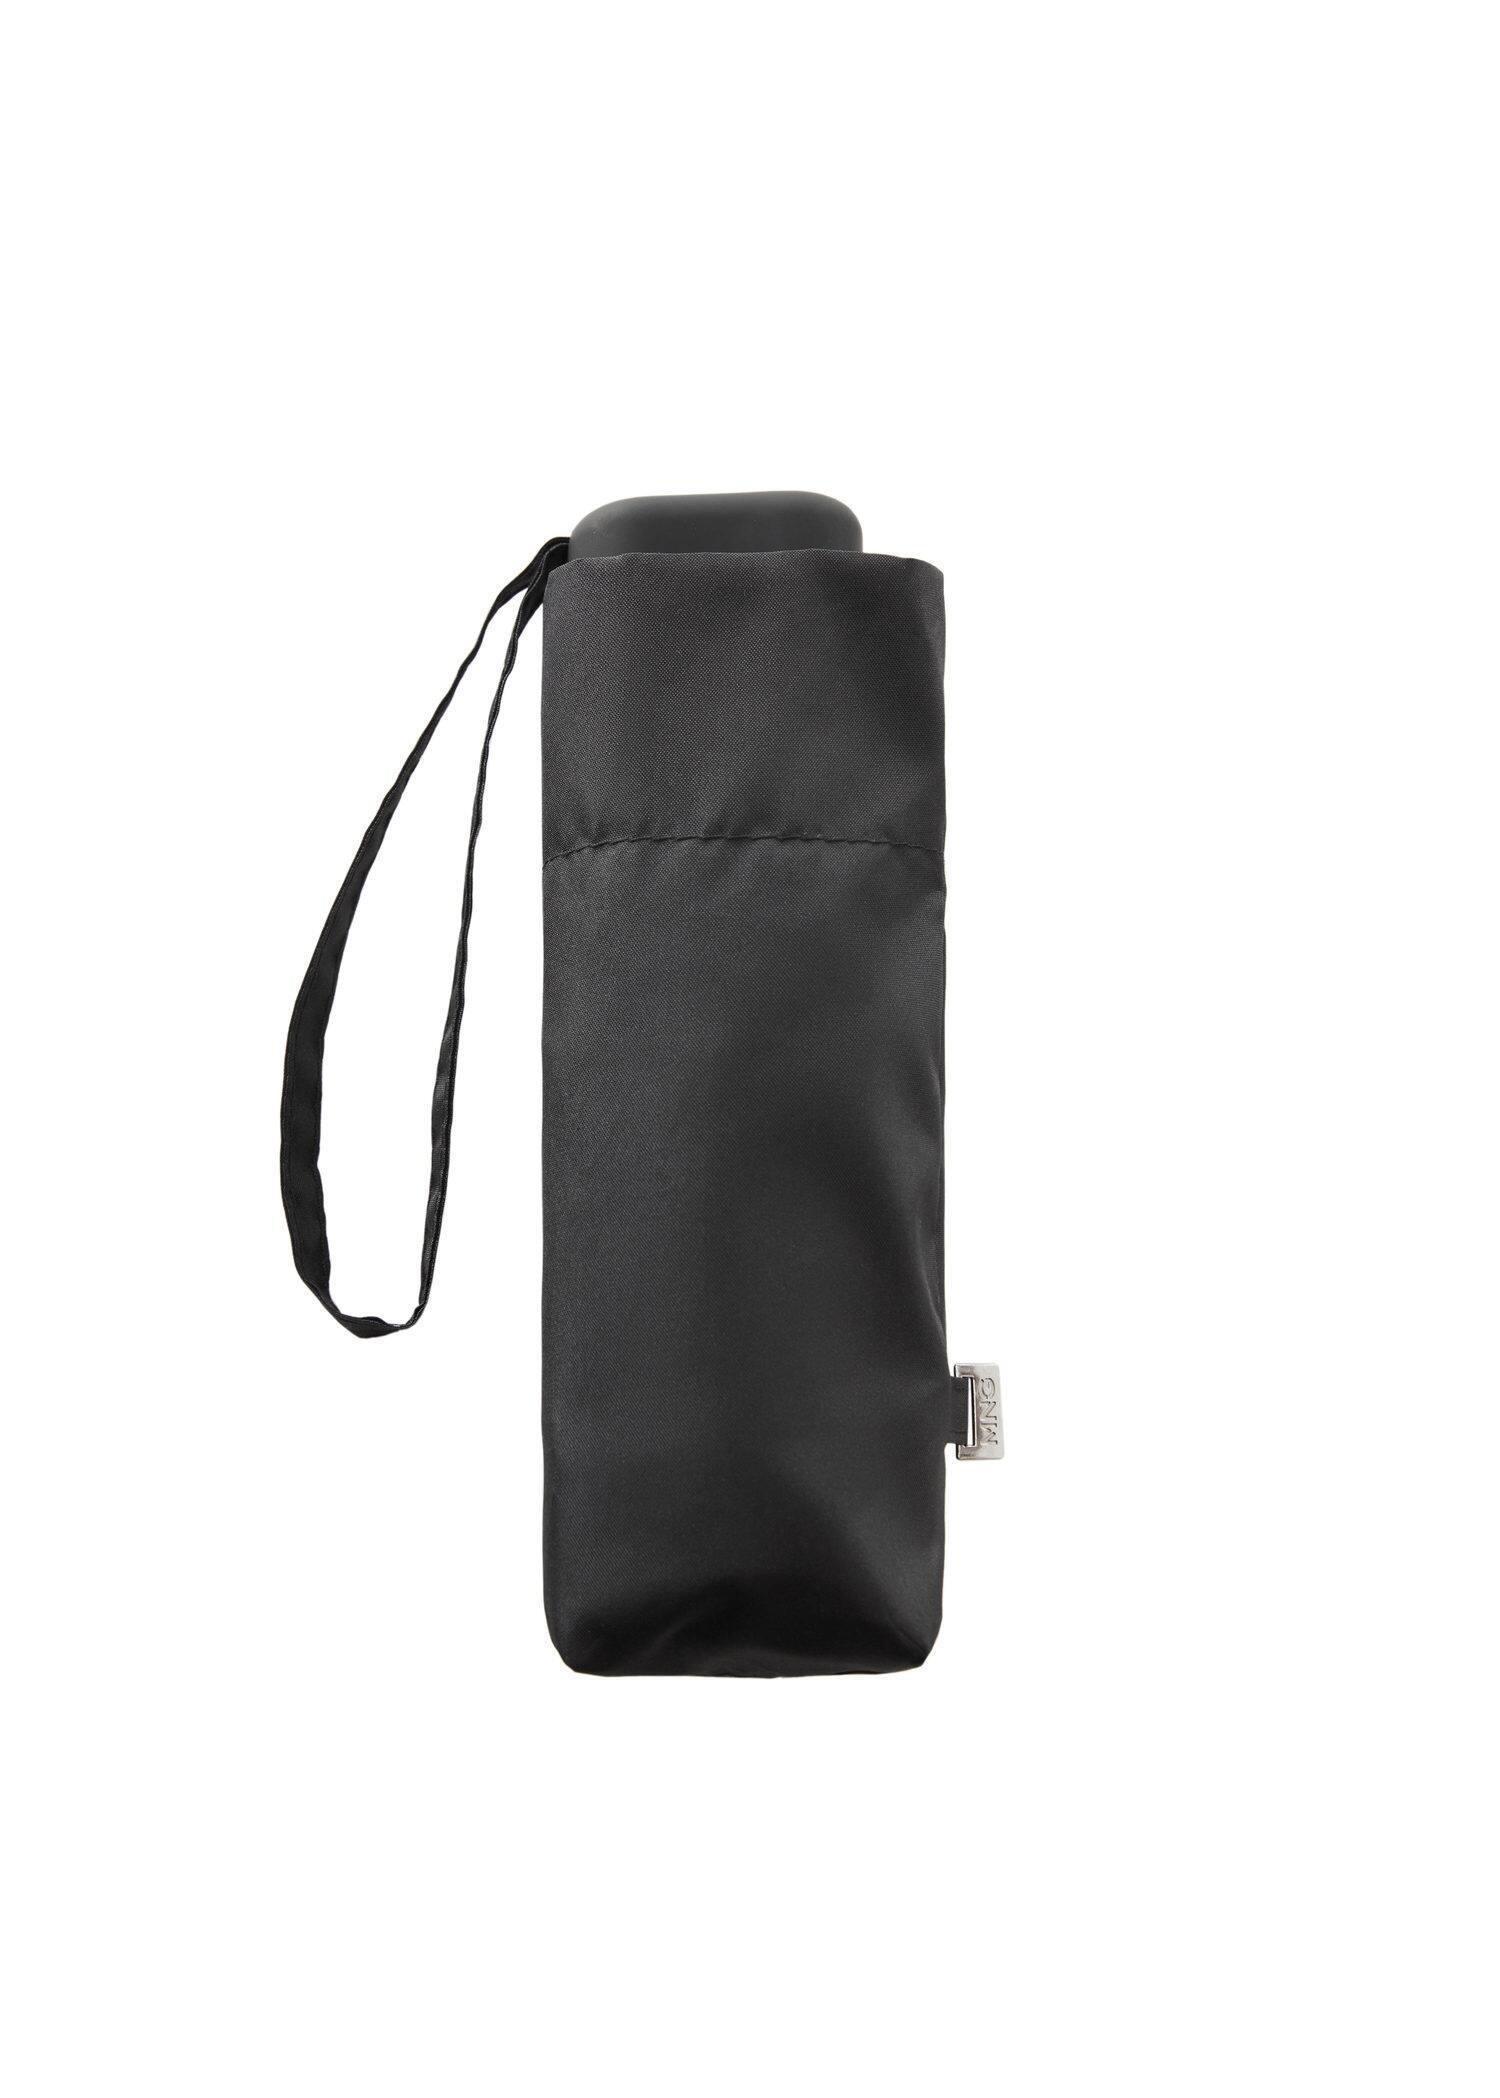 Mango - Black Mini Folding Umbrella